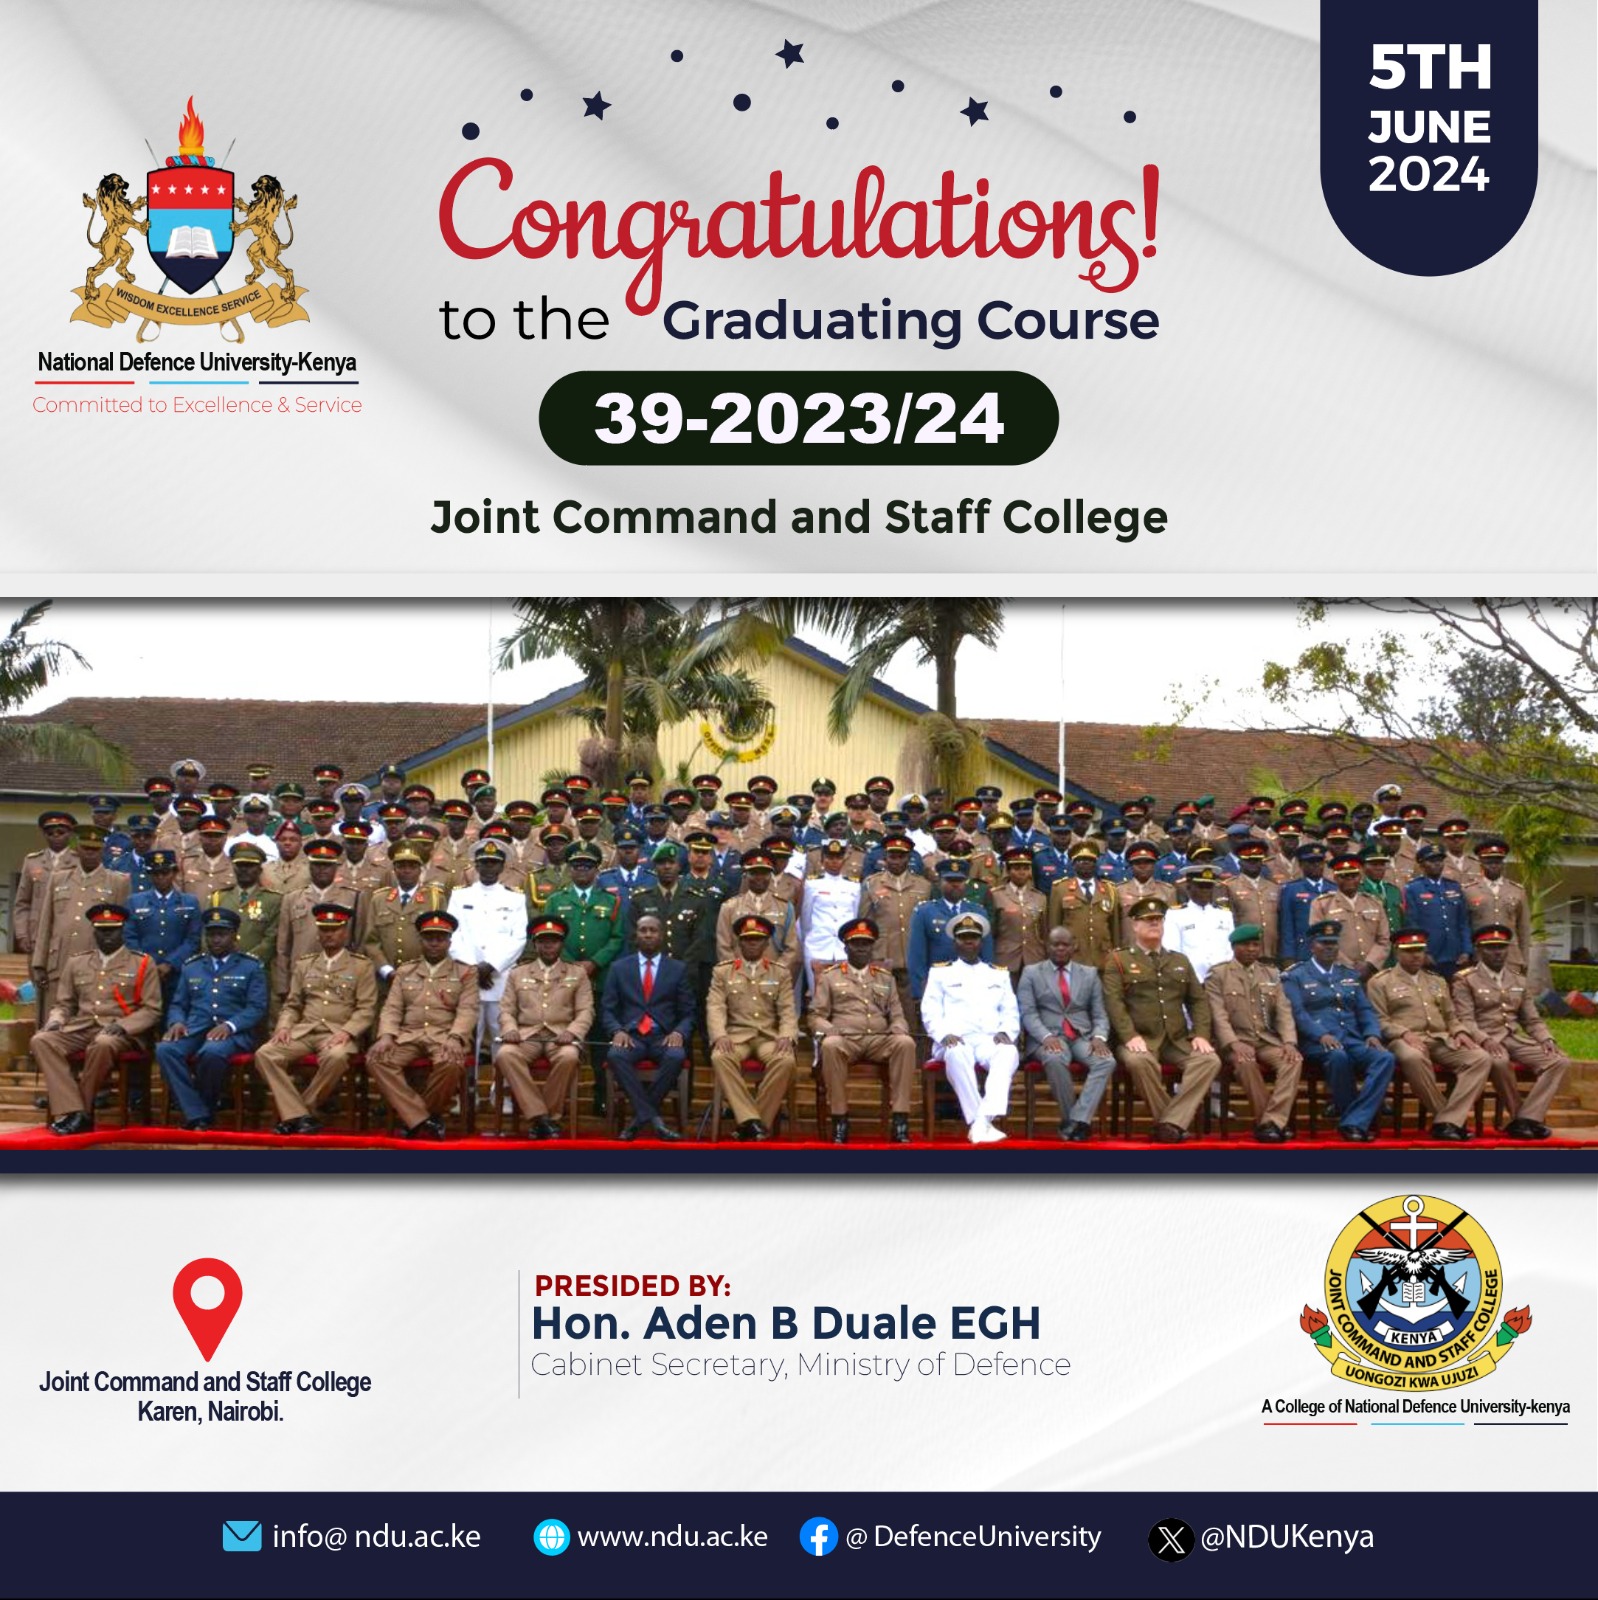 Congratulations to the Graduating Course 39-2023/24 JCSC